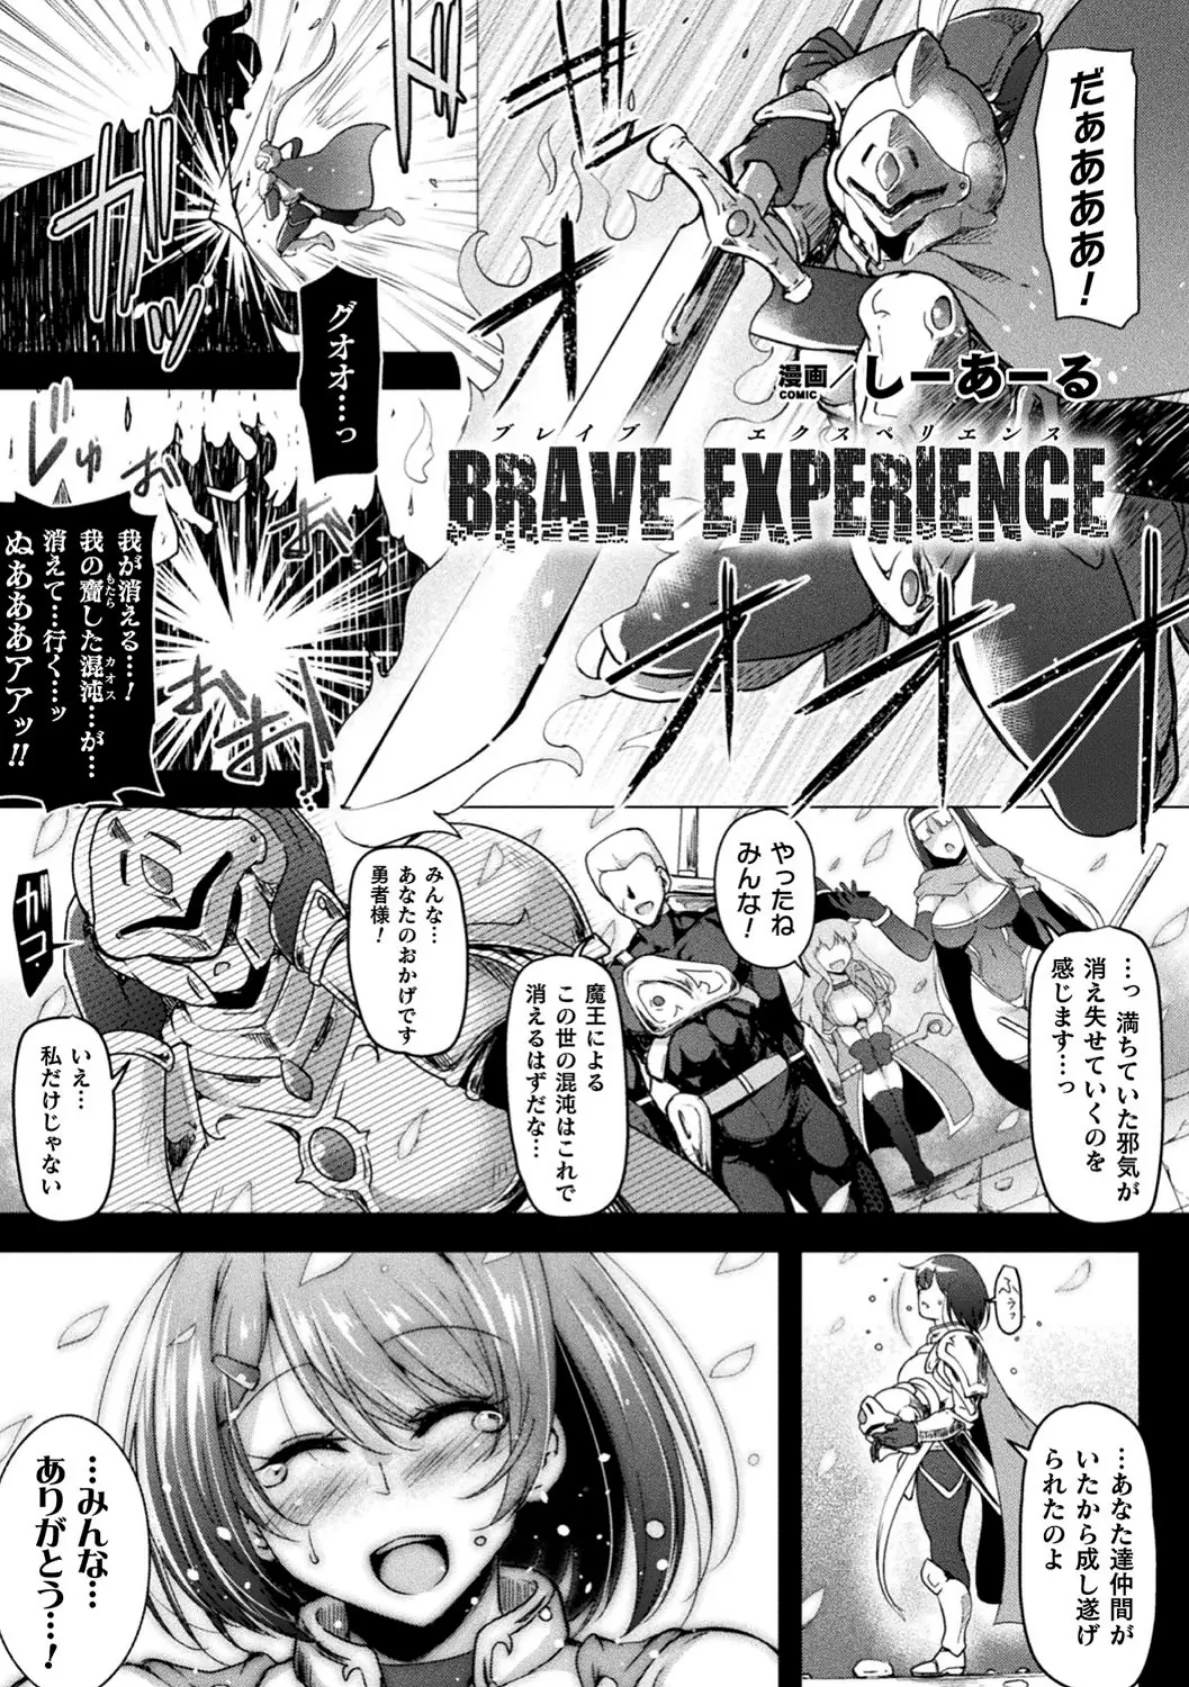 BRAVE EXPERIENCE【単話】